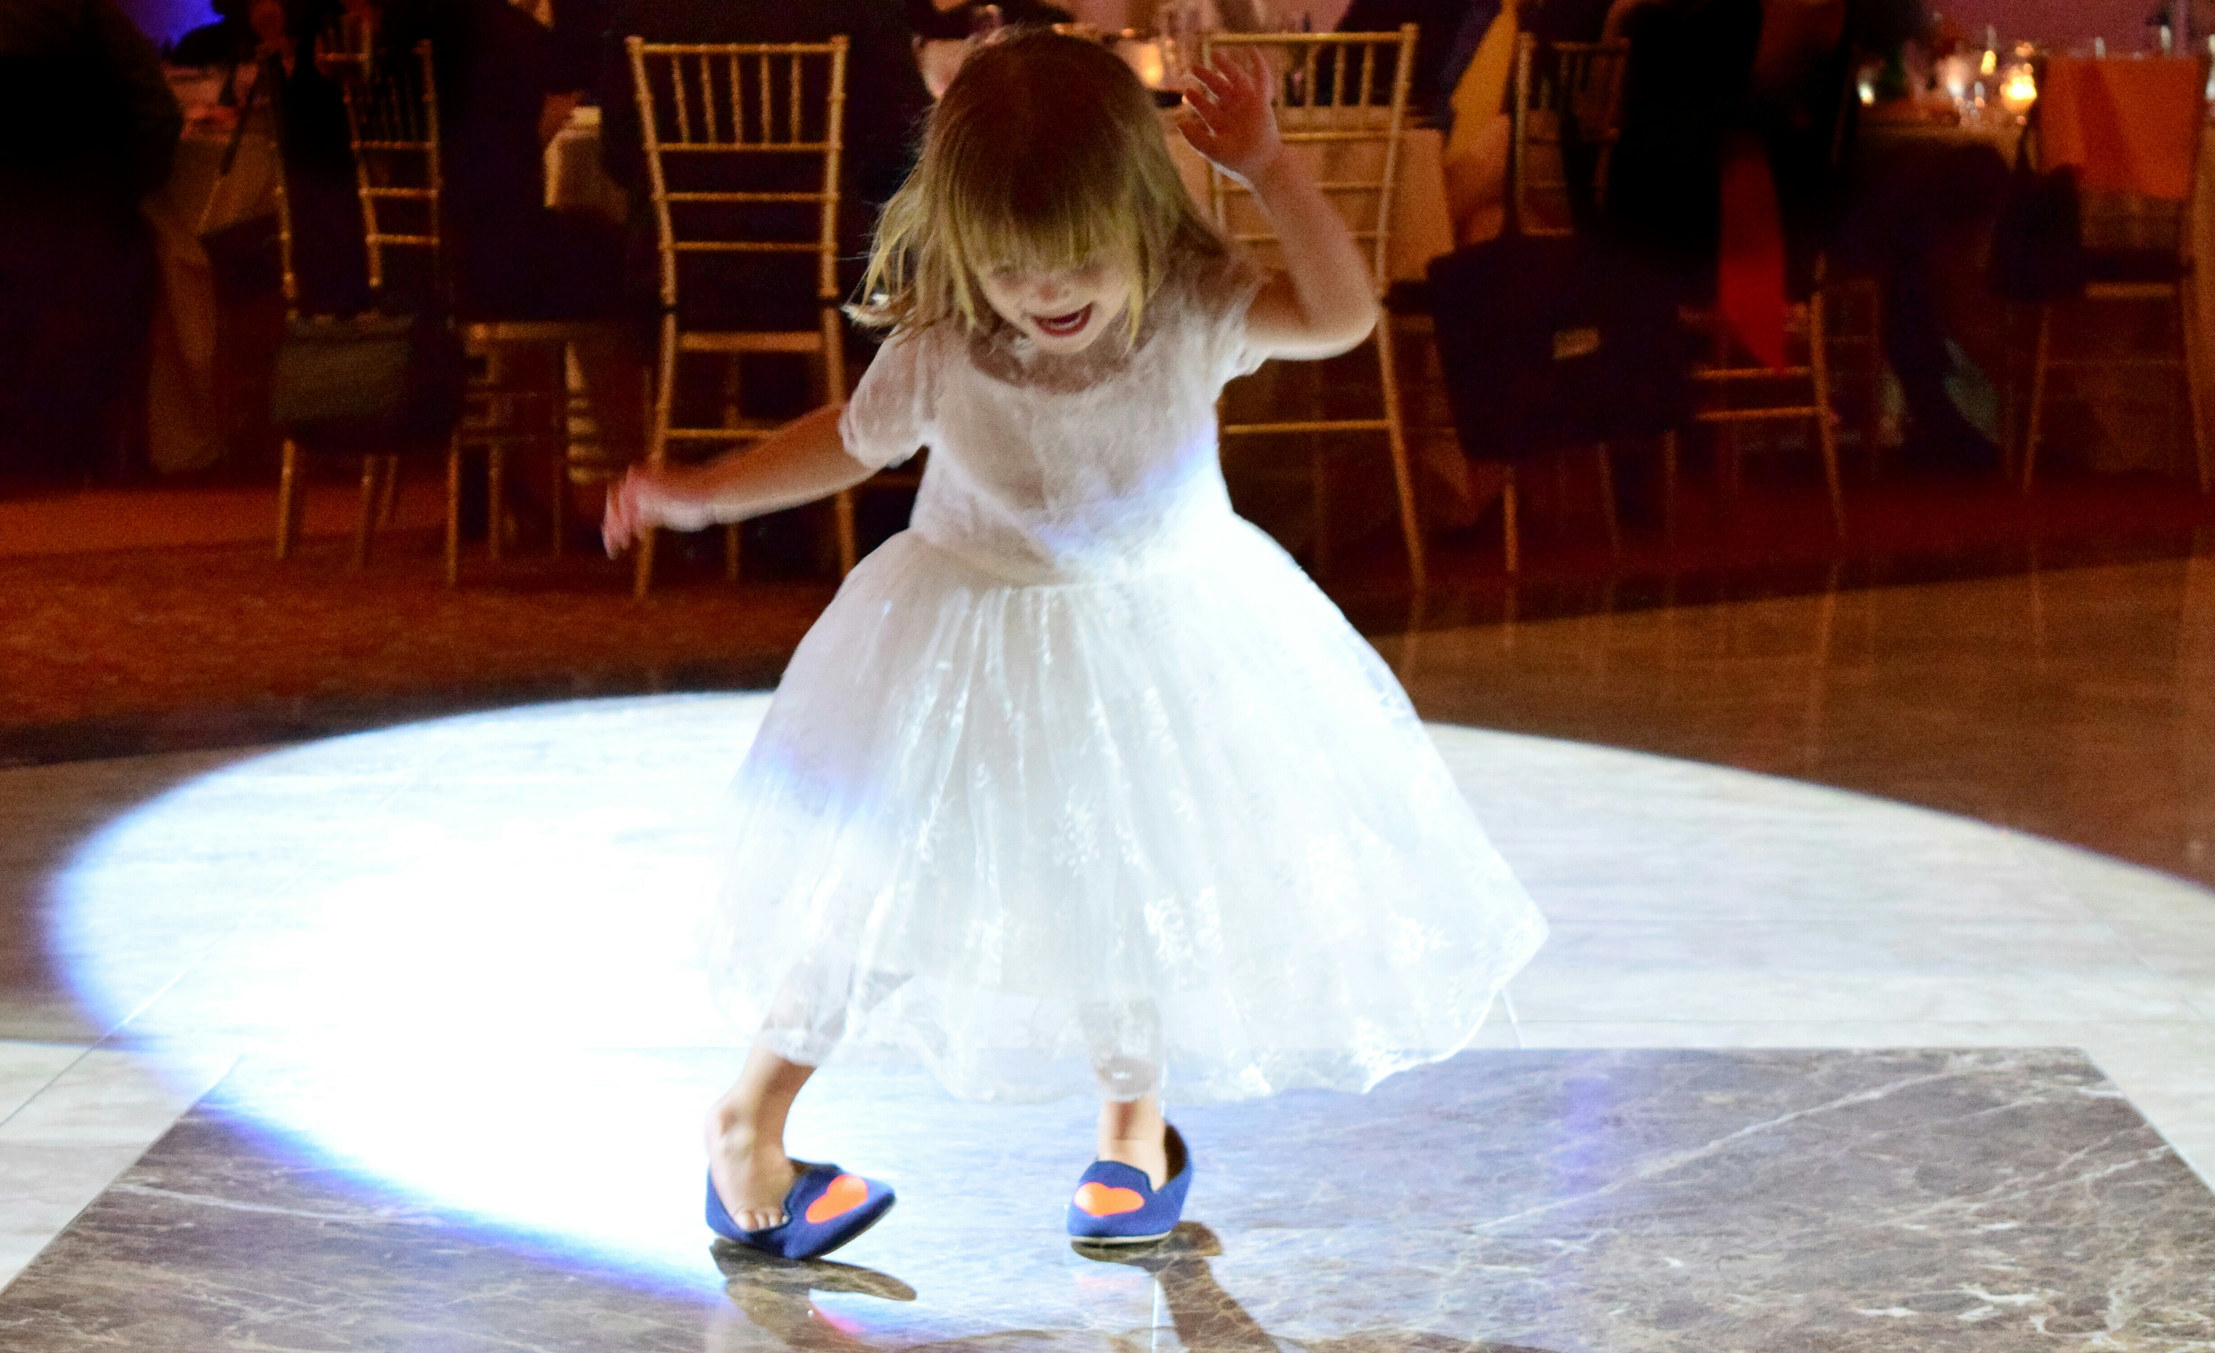 A little girl dancing on the dance floor